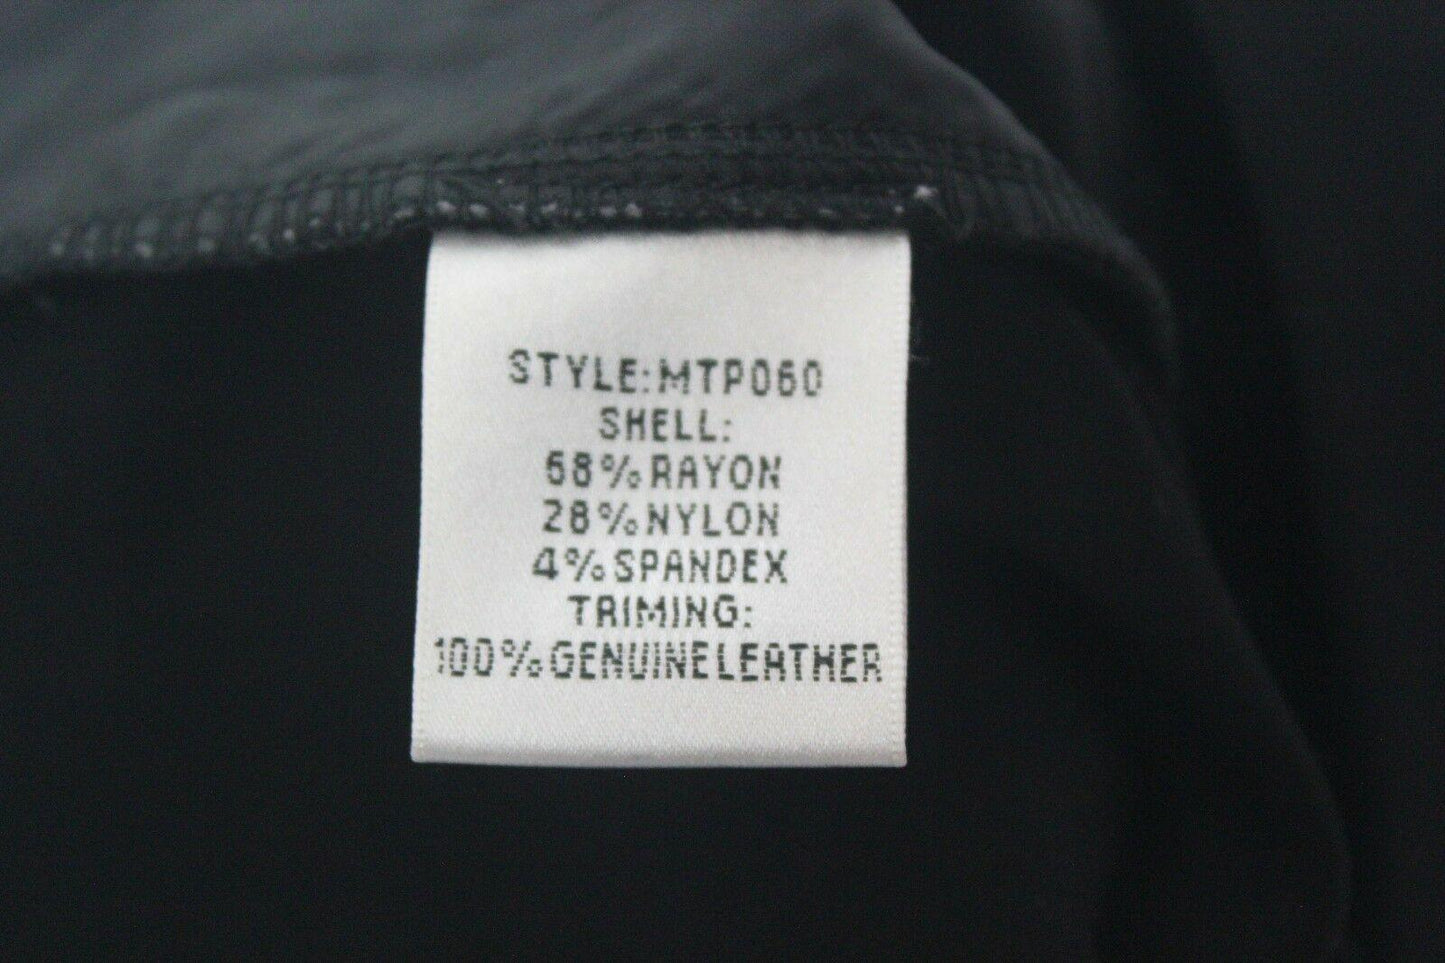 My Tribe Black %100 Leather Side Panel Legging Stretch Pants Size S - SVNYFancy